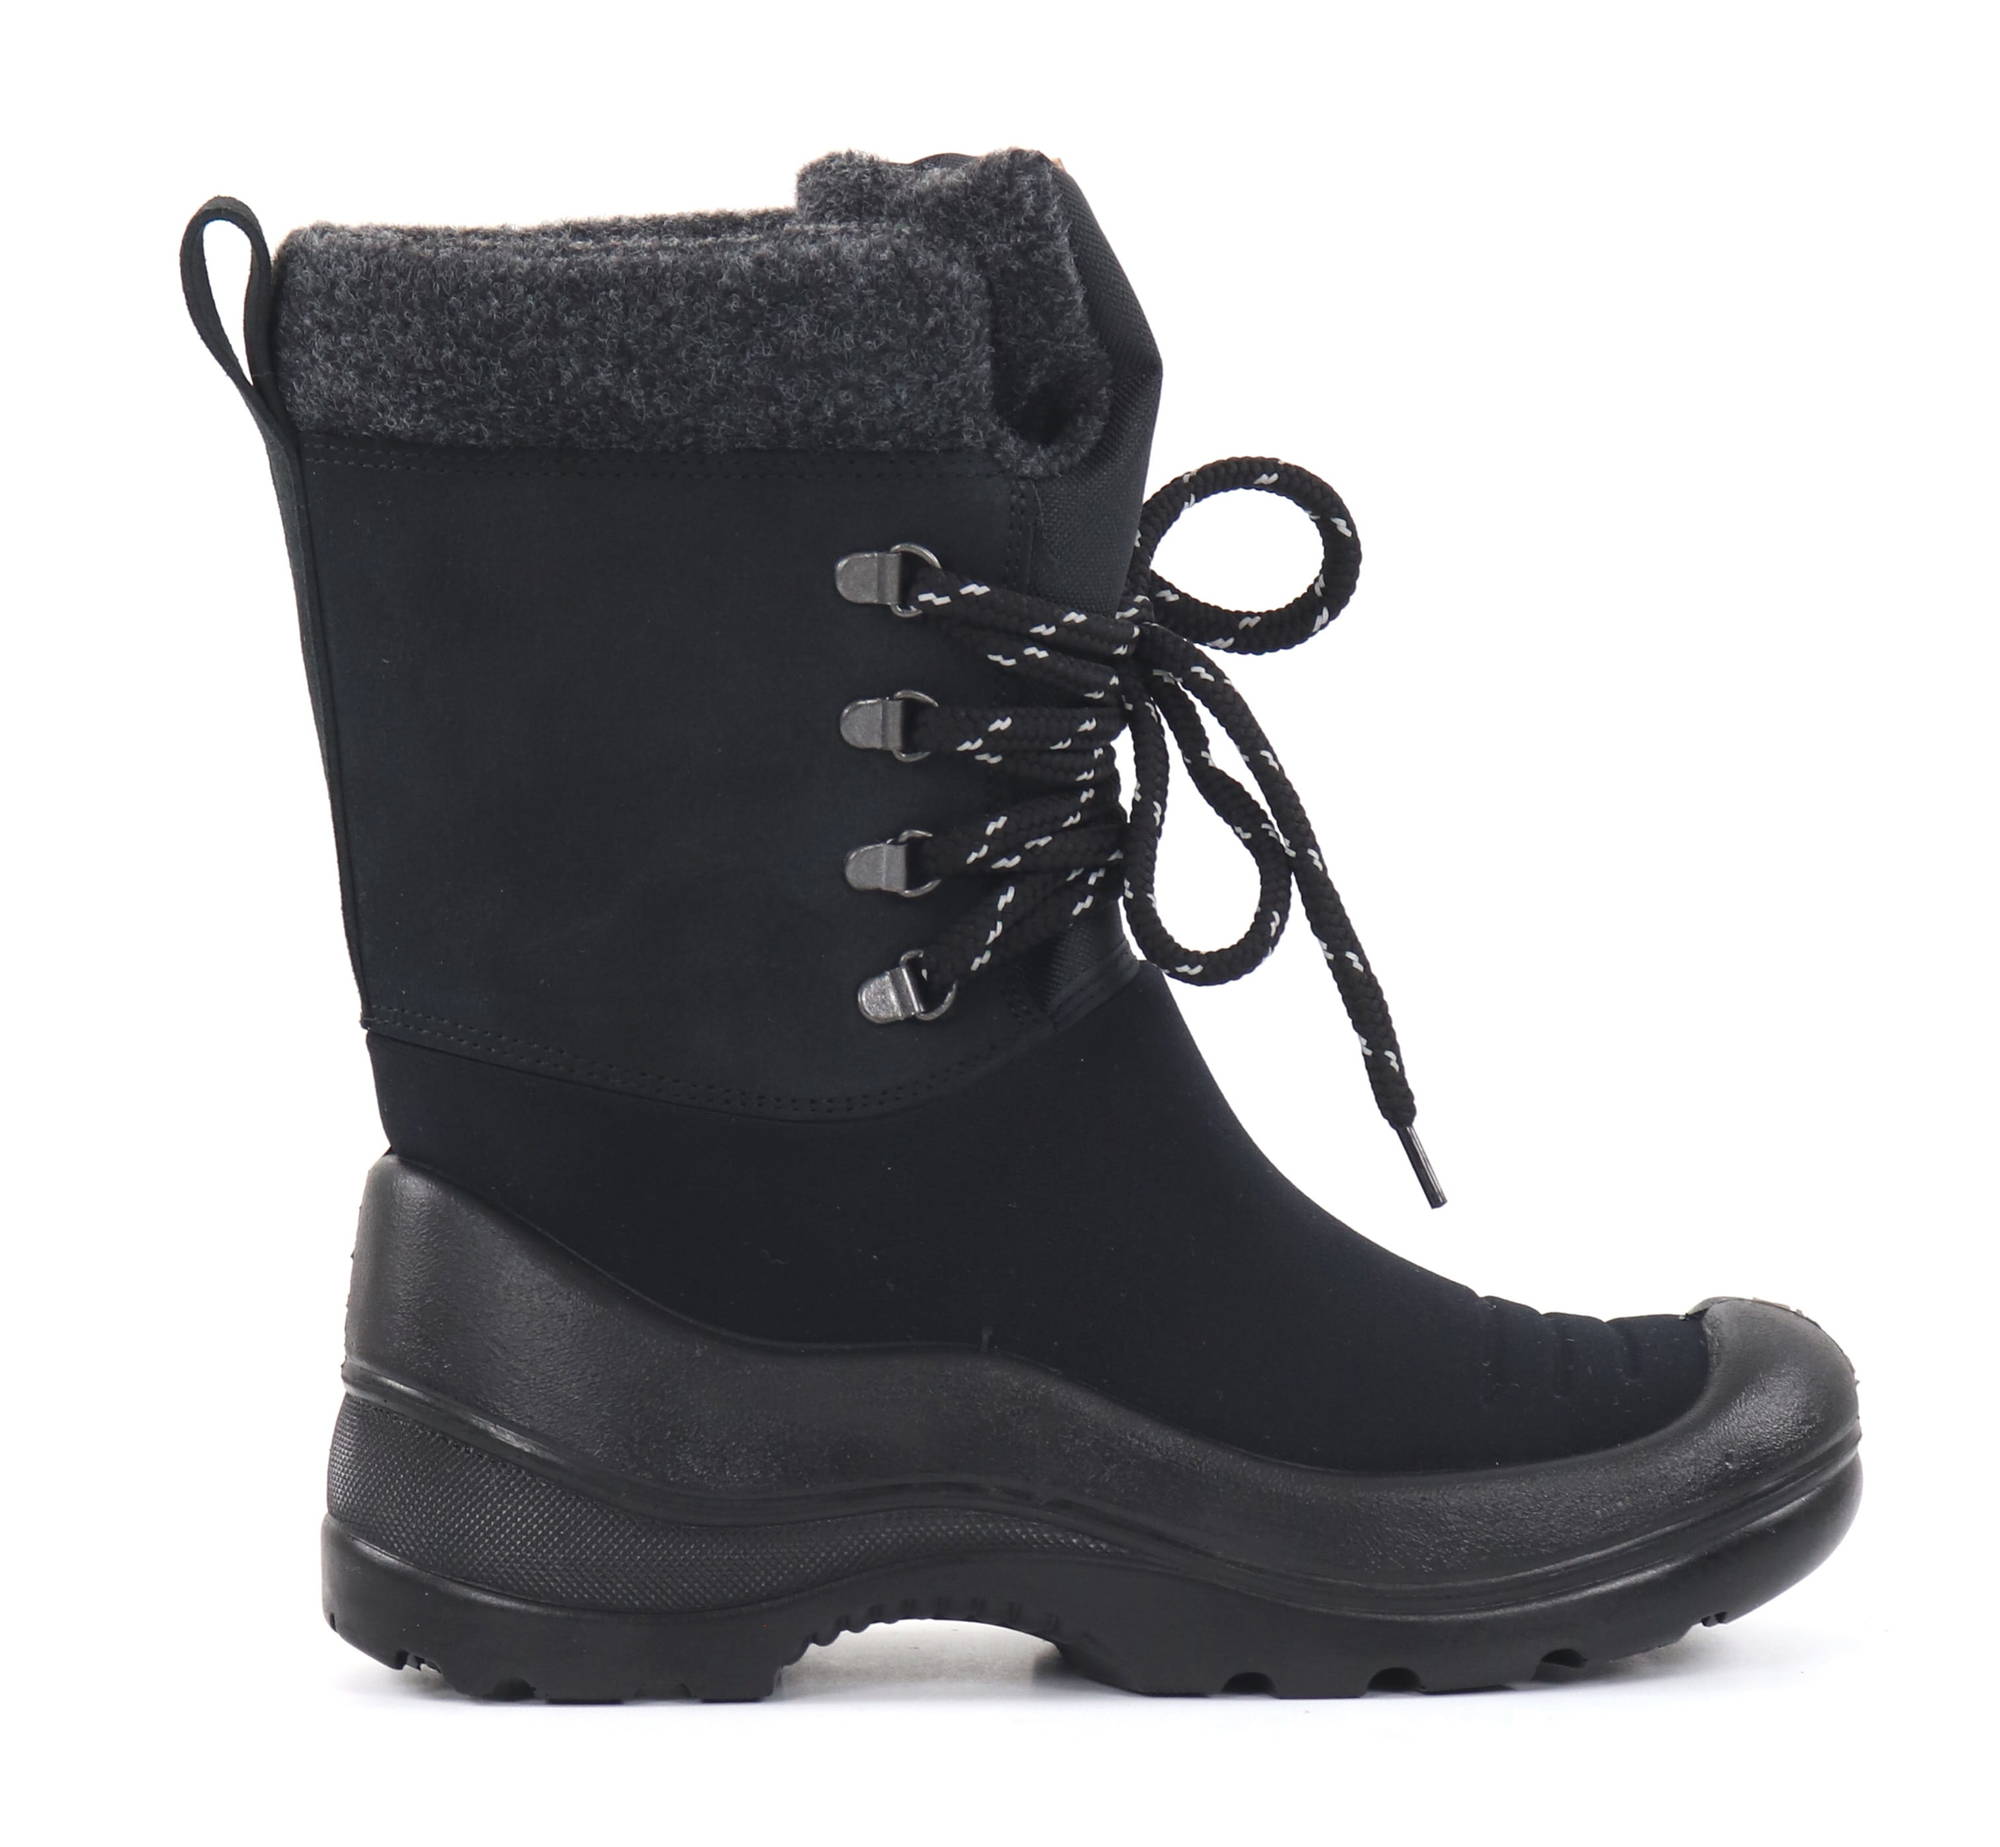 Kuoma Winter Boots Reipas, black - Stilettoshop.eu webstore